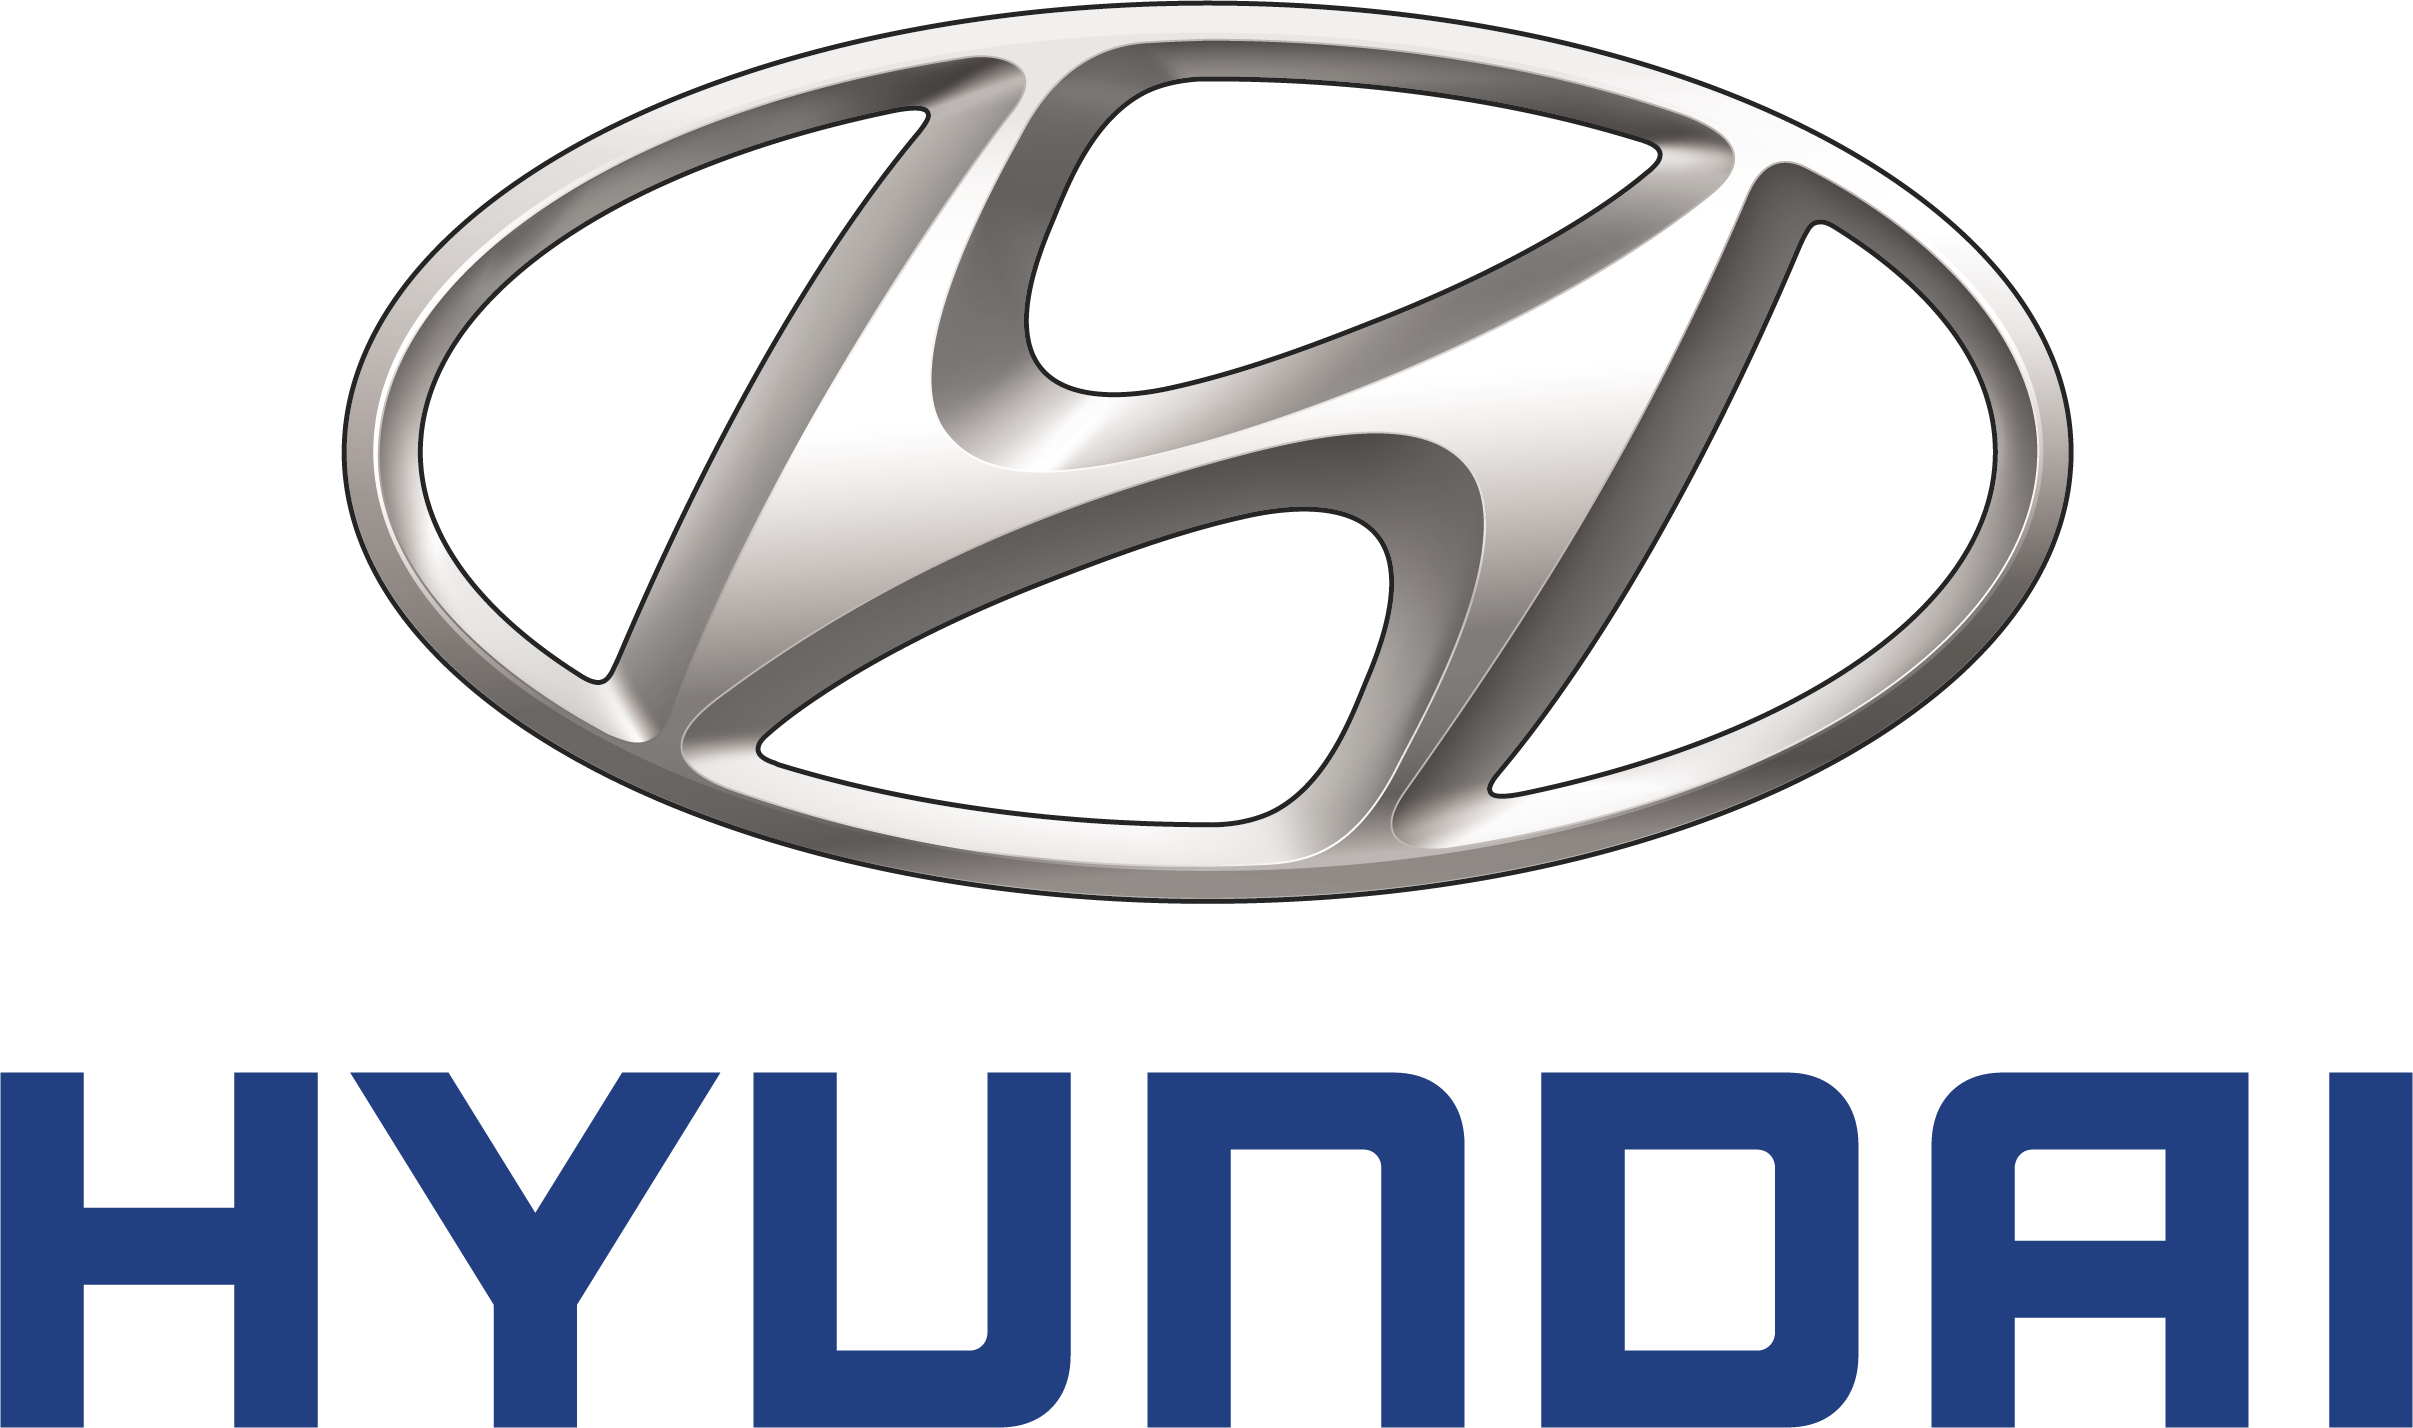 Hyundai-symbol